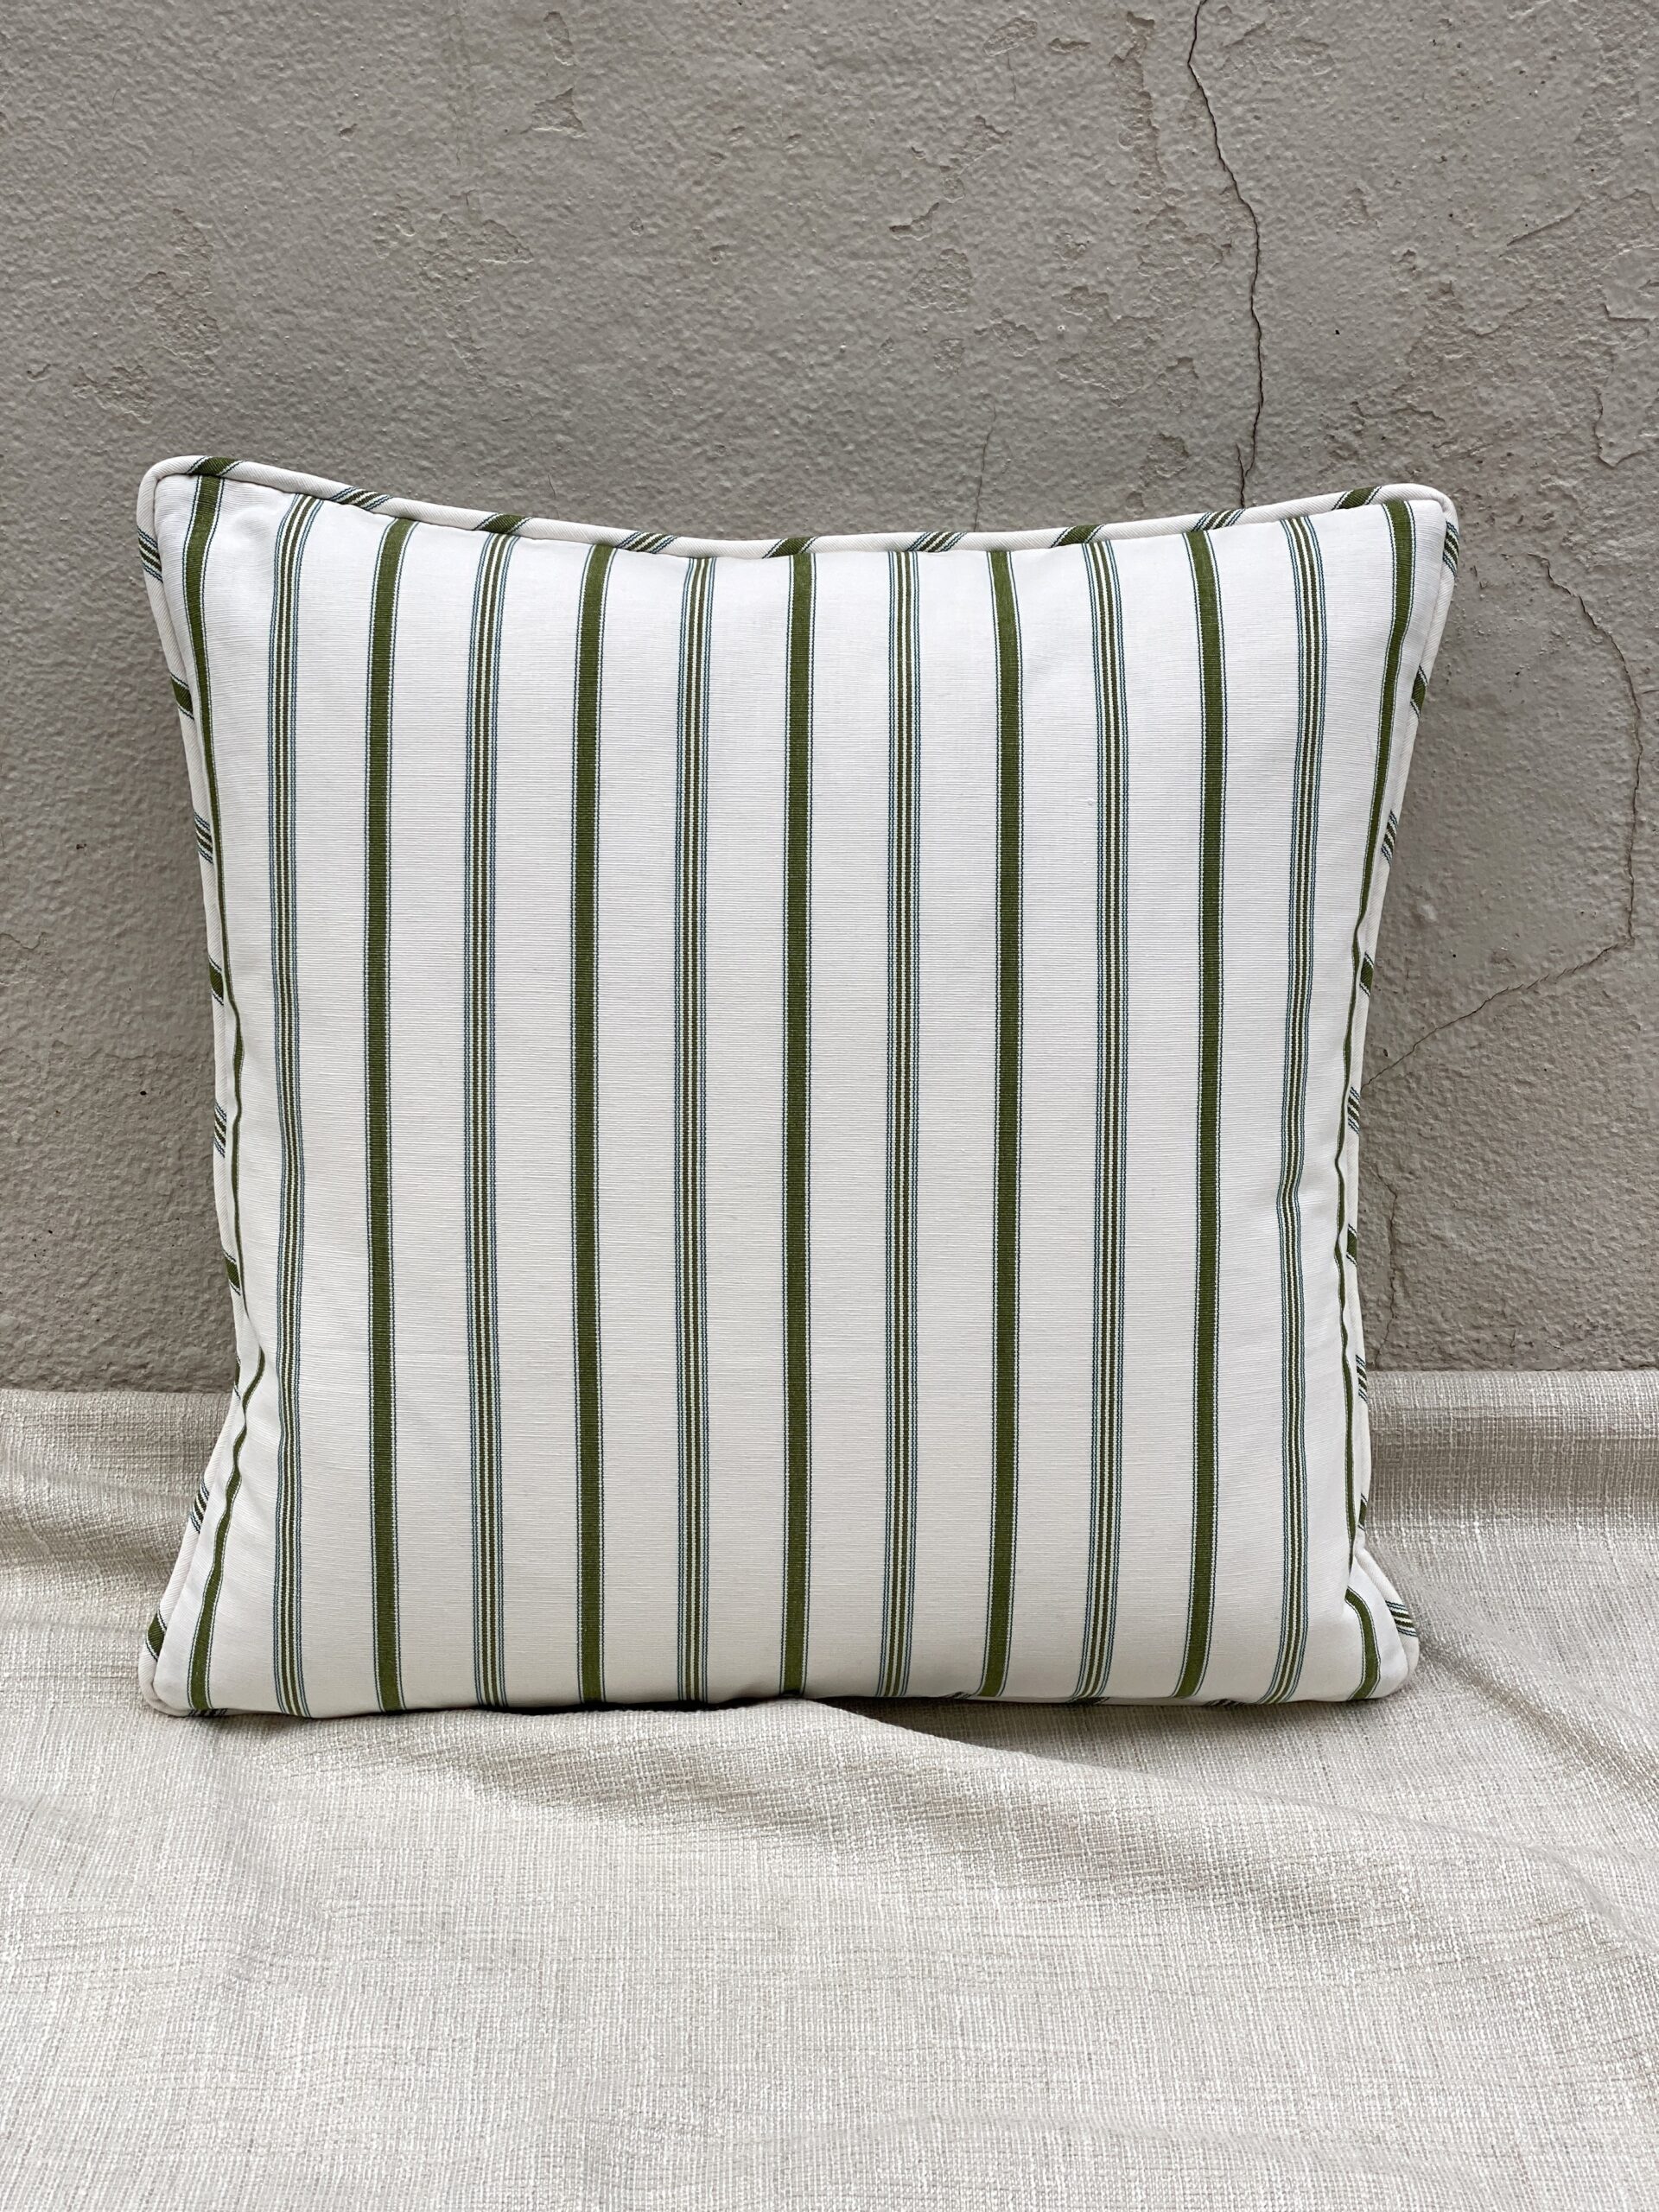 Highland House Vineyard Stripe Pillows